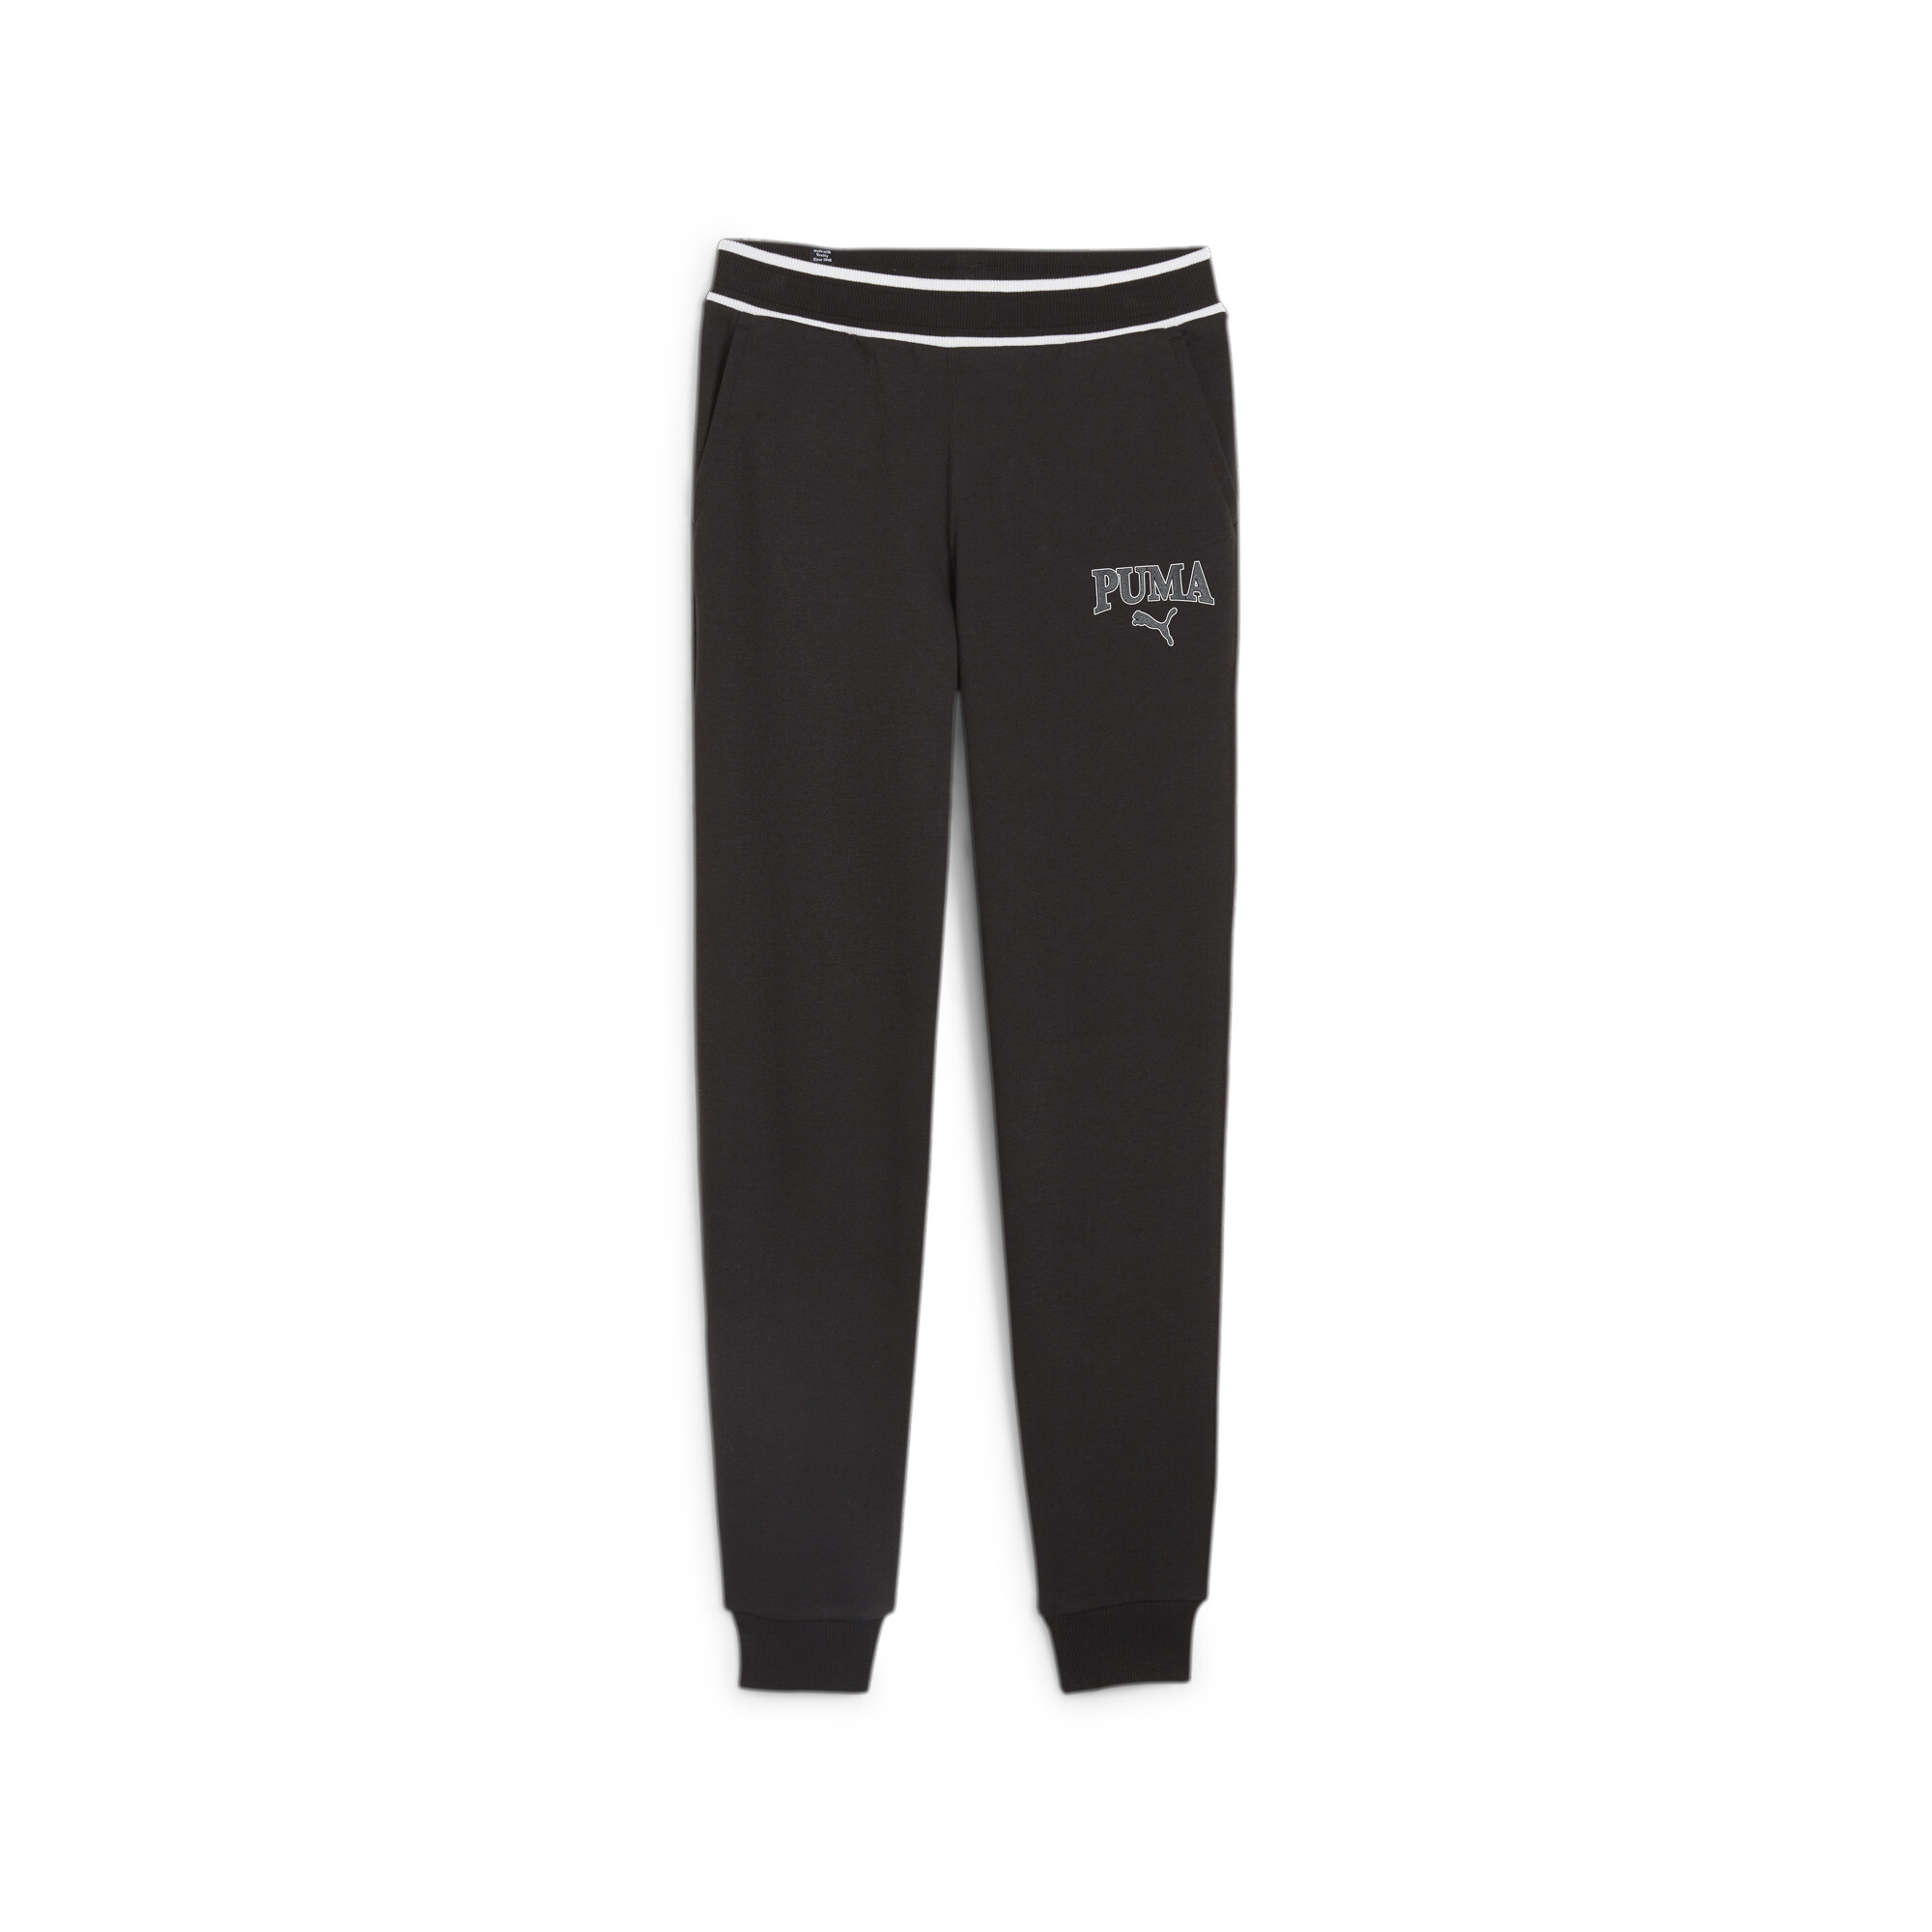 Men's Puma SQUAD Youth Sweatpants, Black, Size 11-12Y, Age